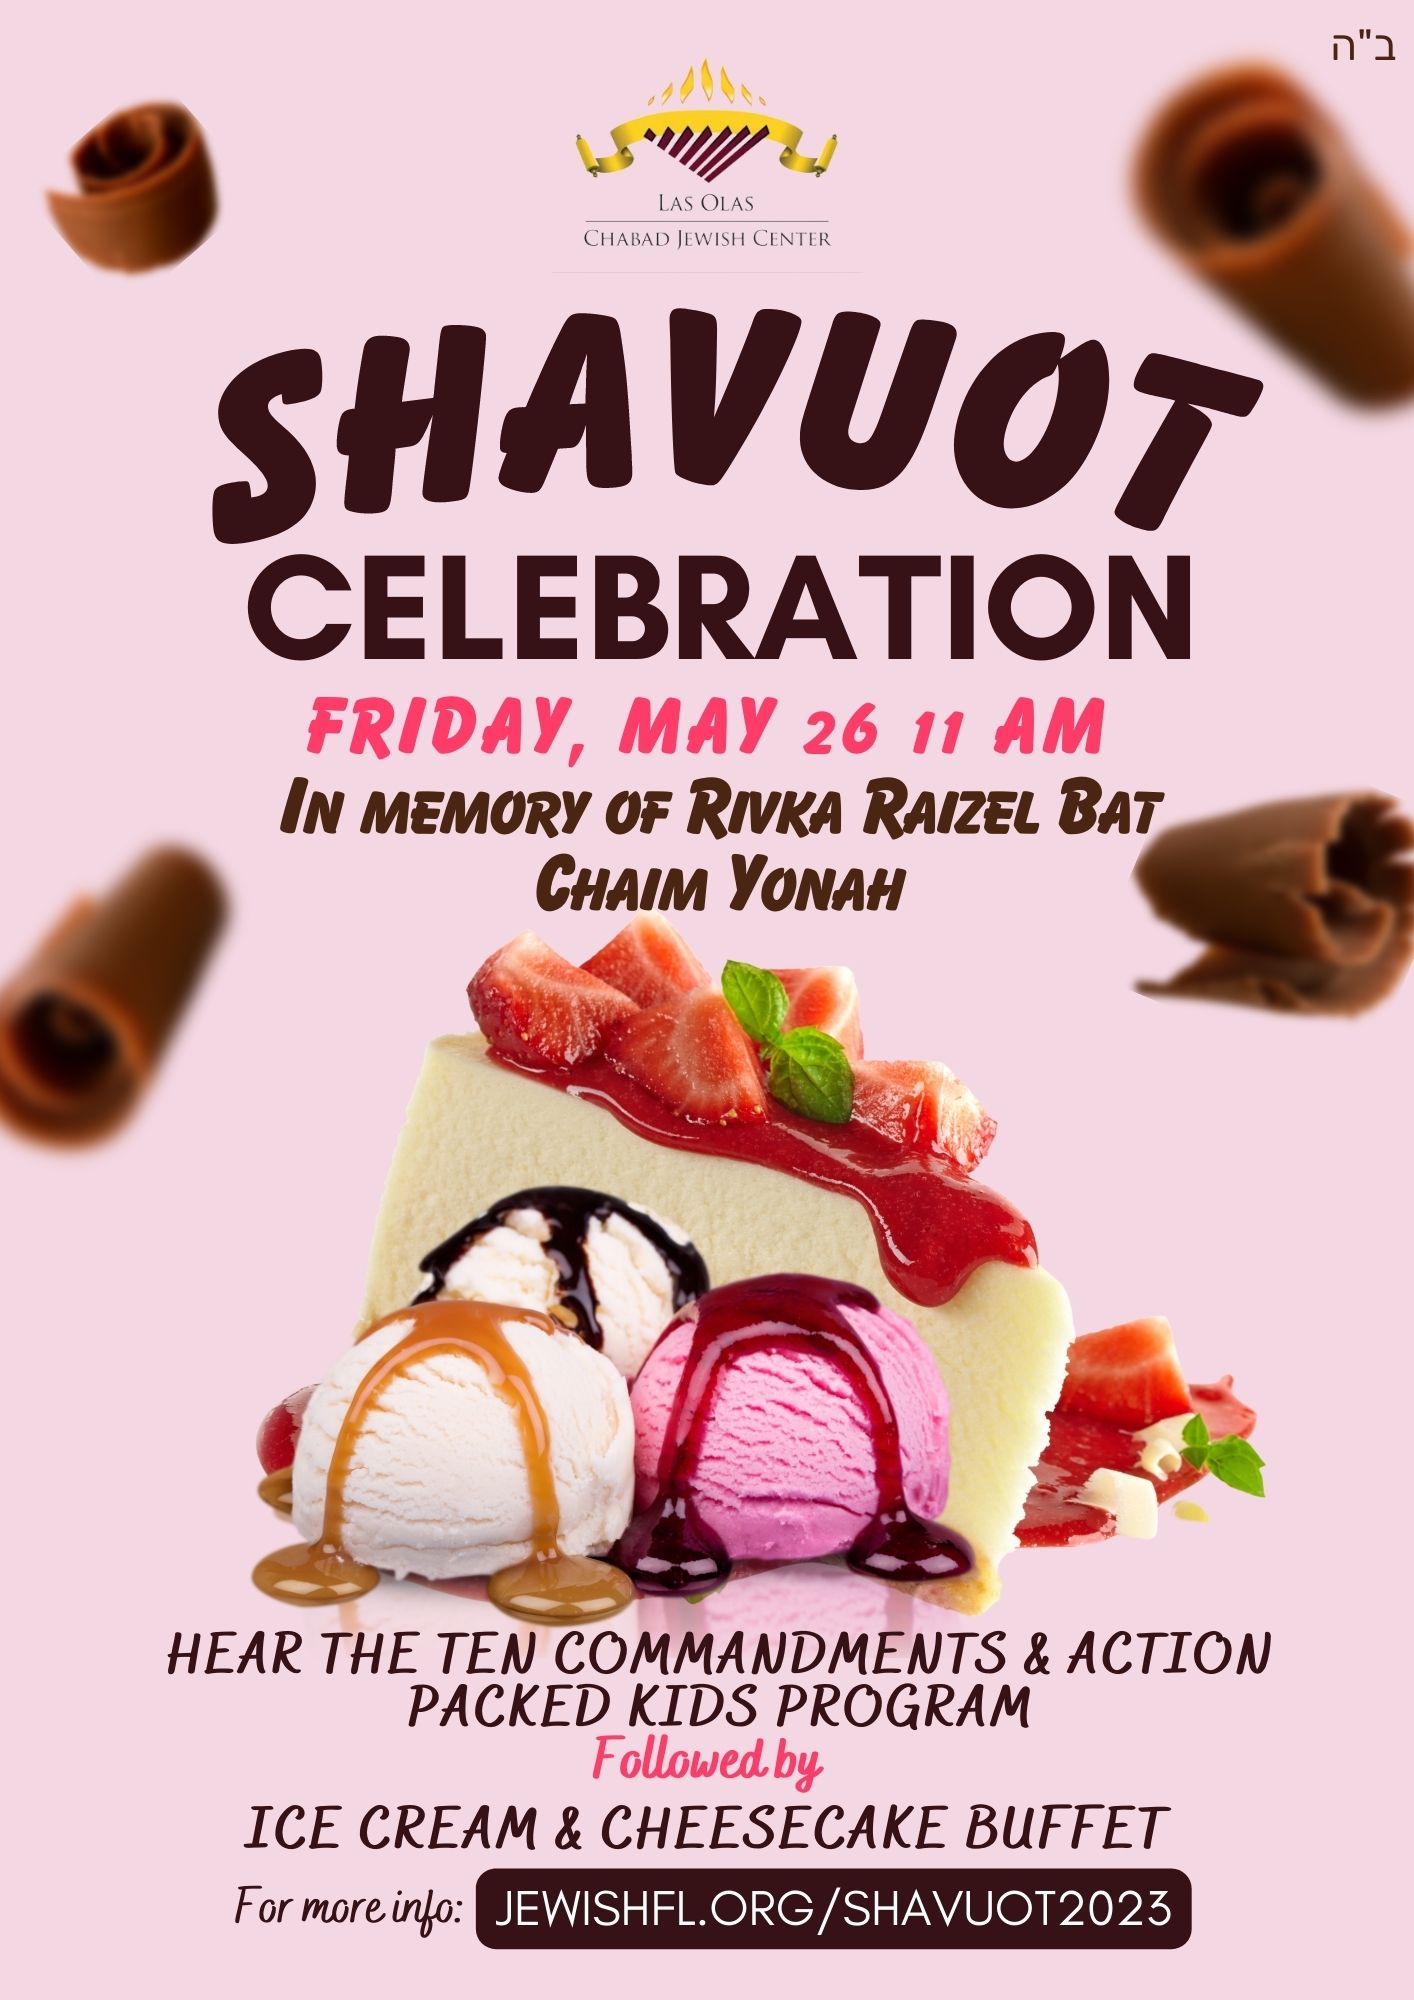 Shavuot Celebration at Las Olas Chabad Jewish Center